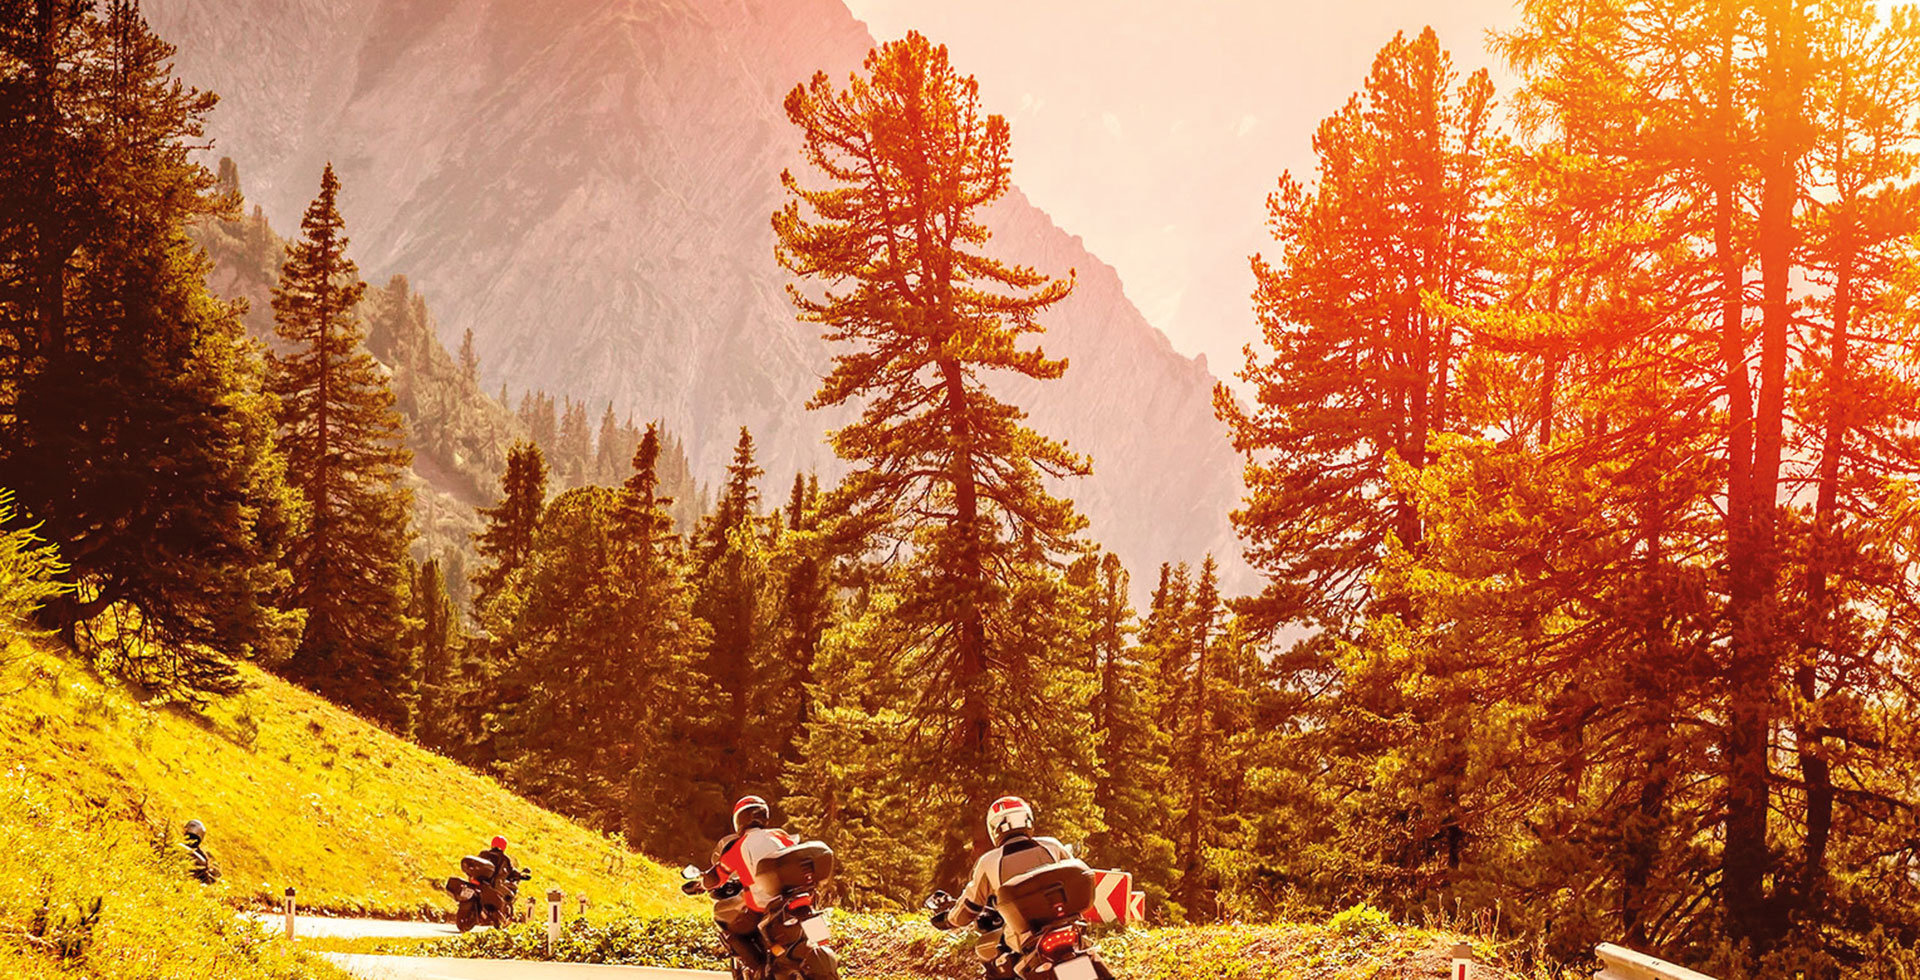 Motor-bike tour in the Dolomites